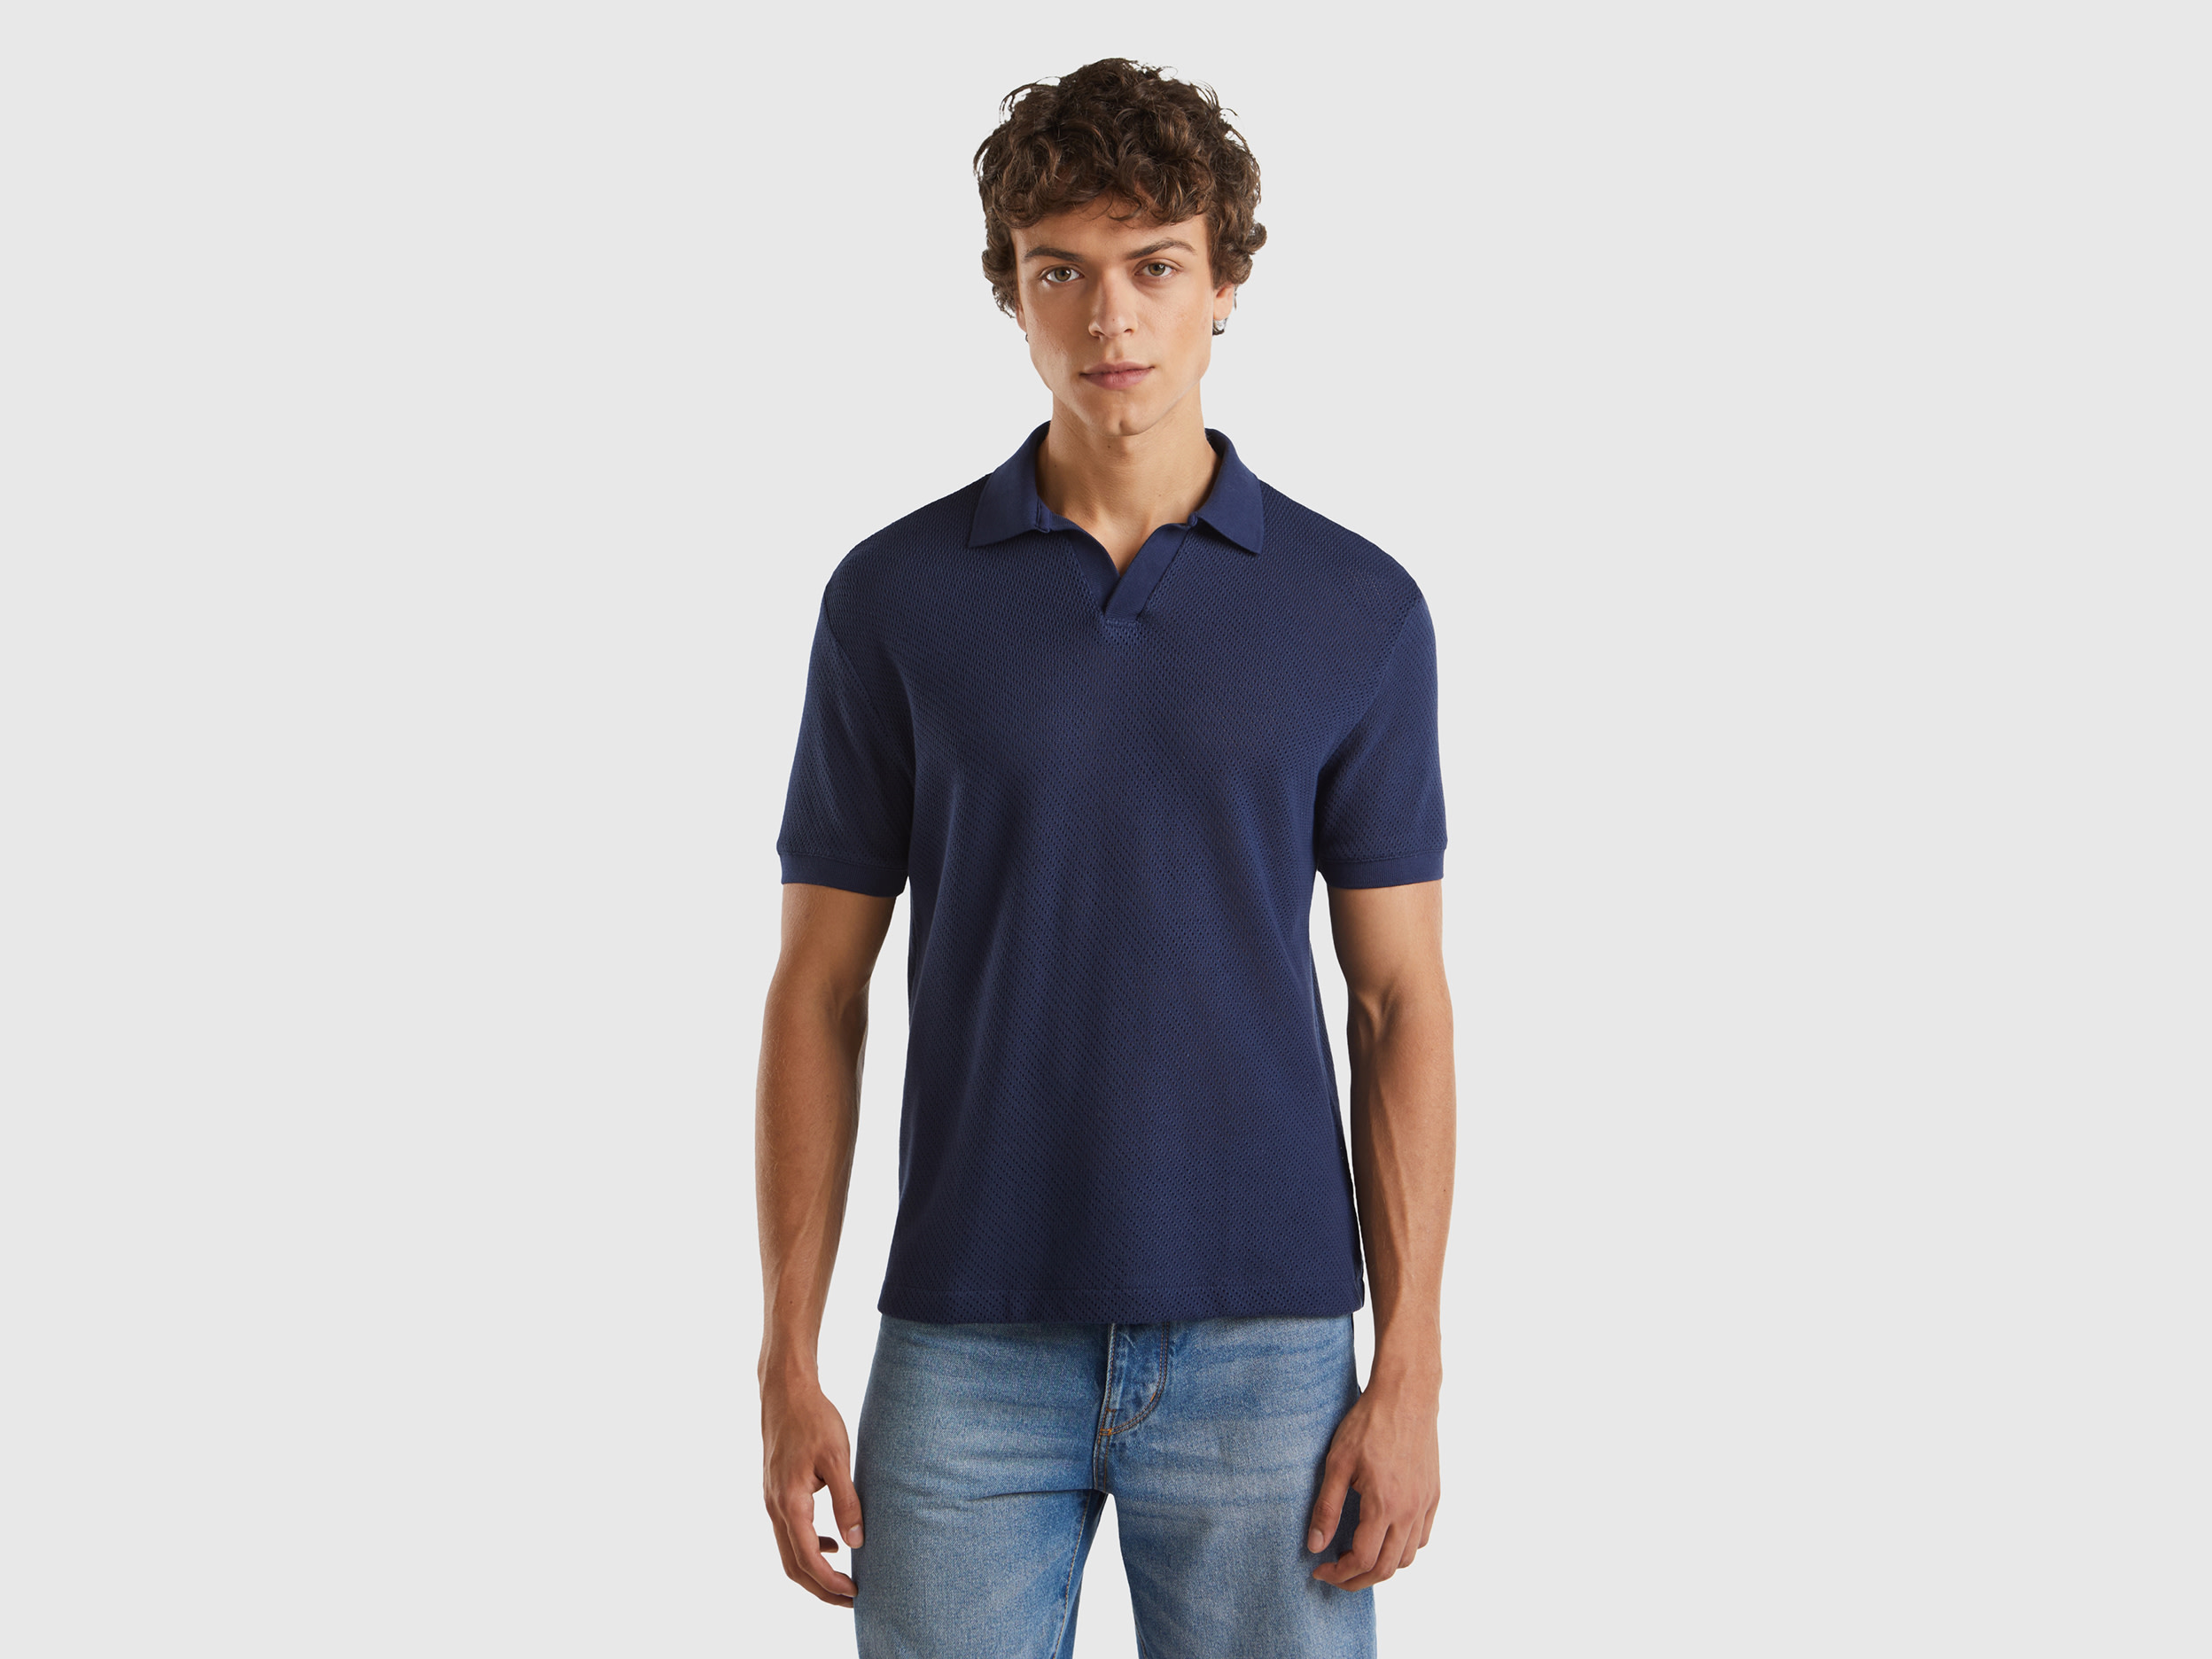 Image of Benetton, Perforated Cotton Polo Shirt, size XXL, Dark Blue, Men